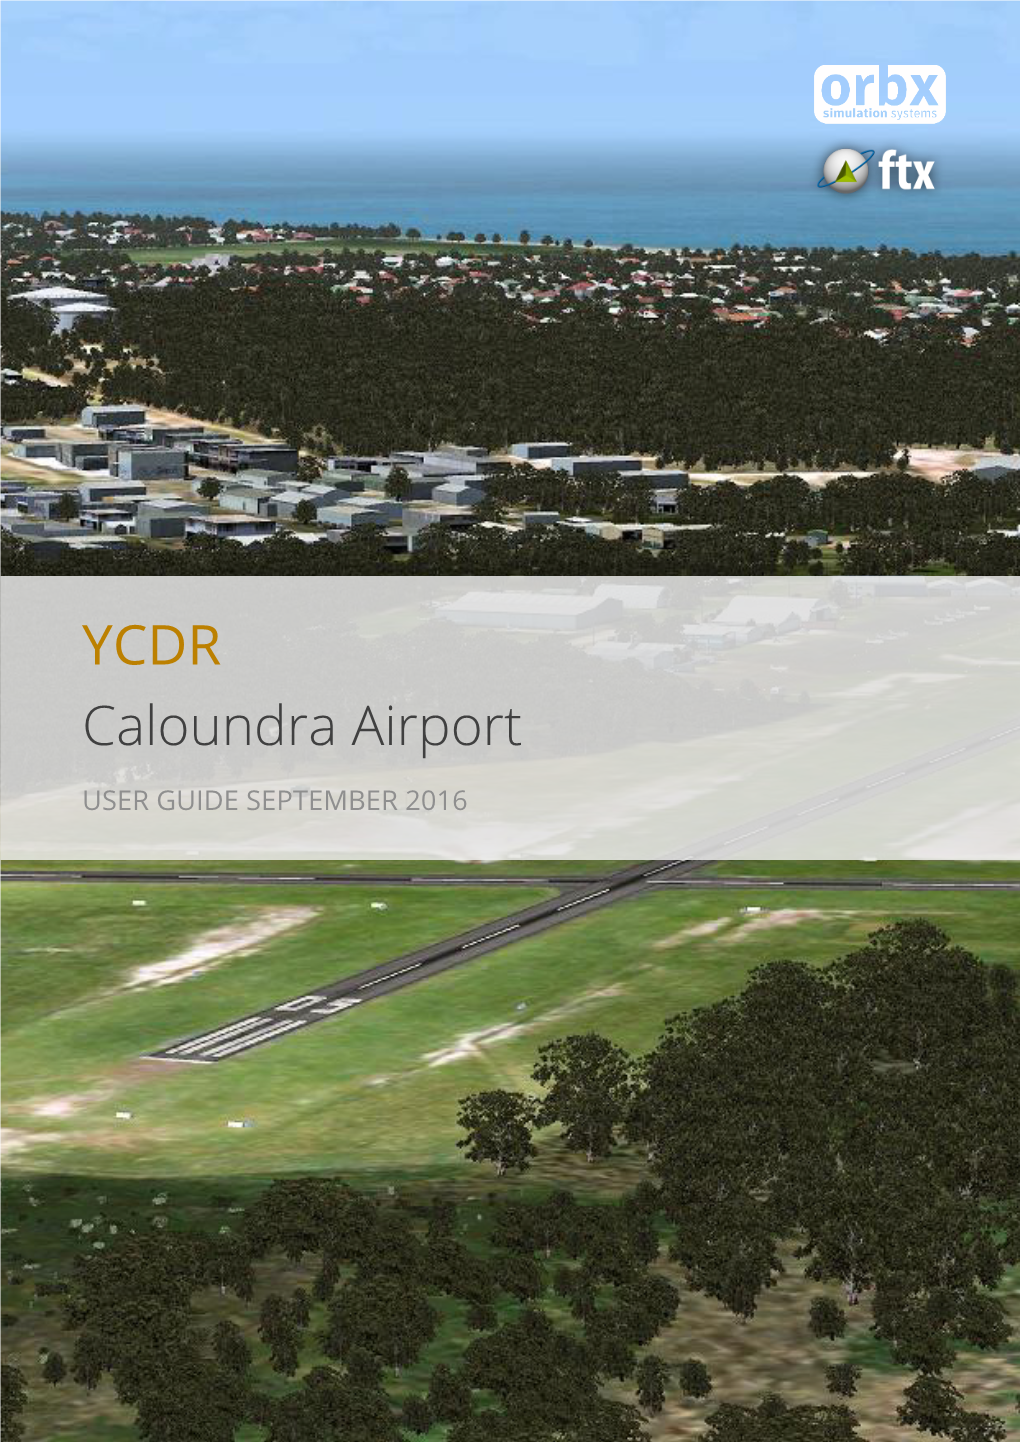 YCDR Caloundra Airport